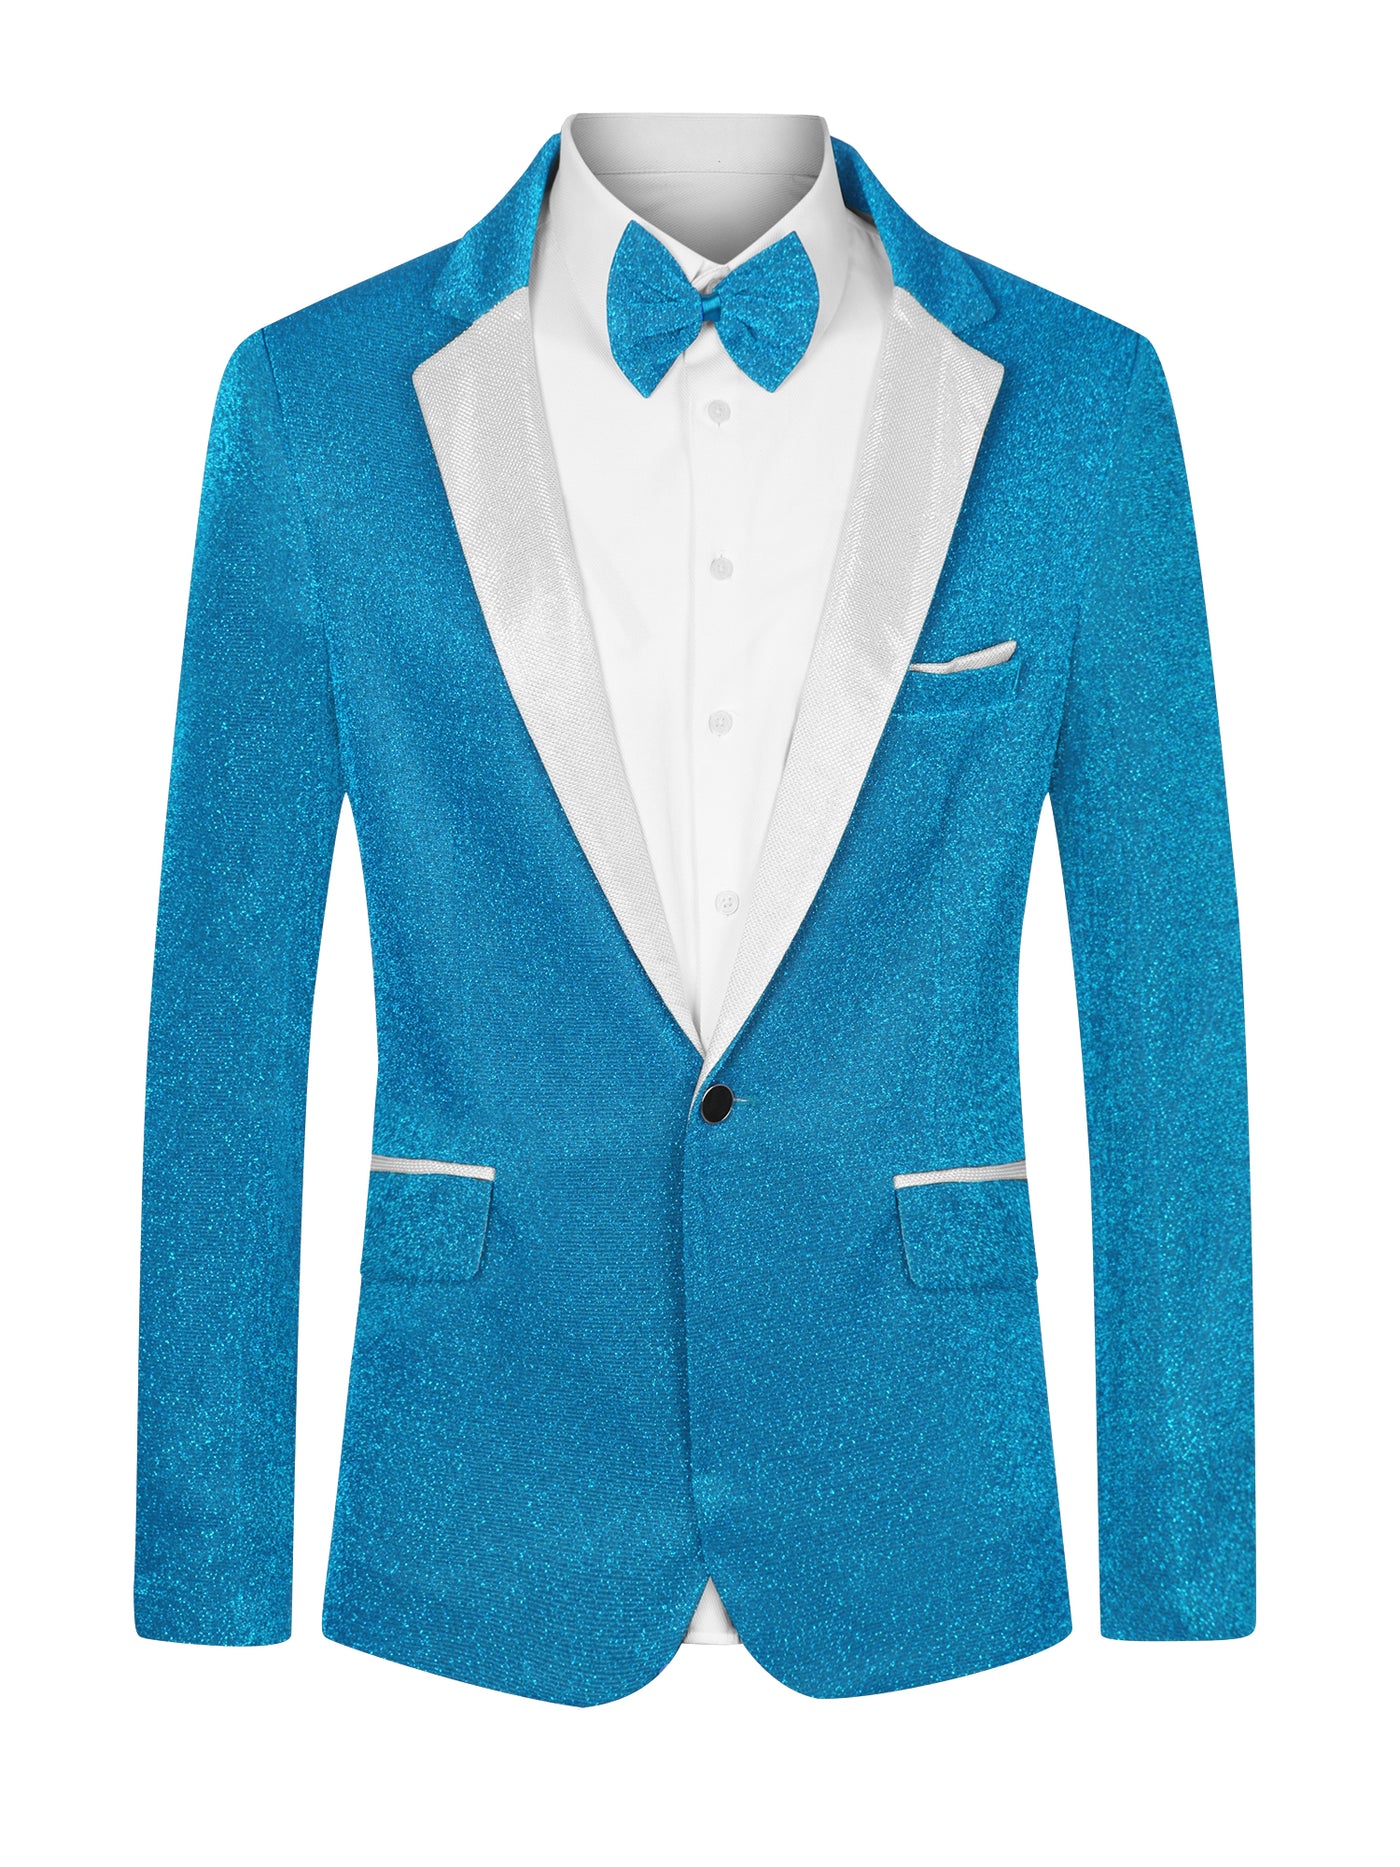 Bublédon Sparkle Blazer with Bow-tie for Men's Notch Lapel Prom Party Sport Coats